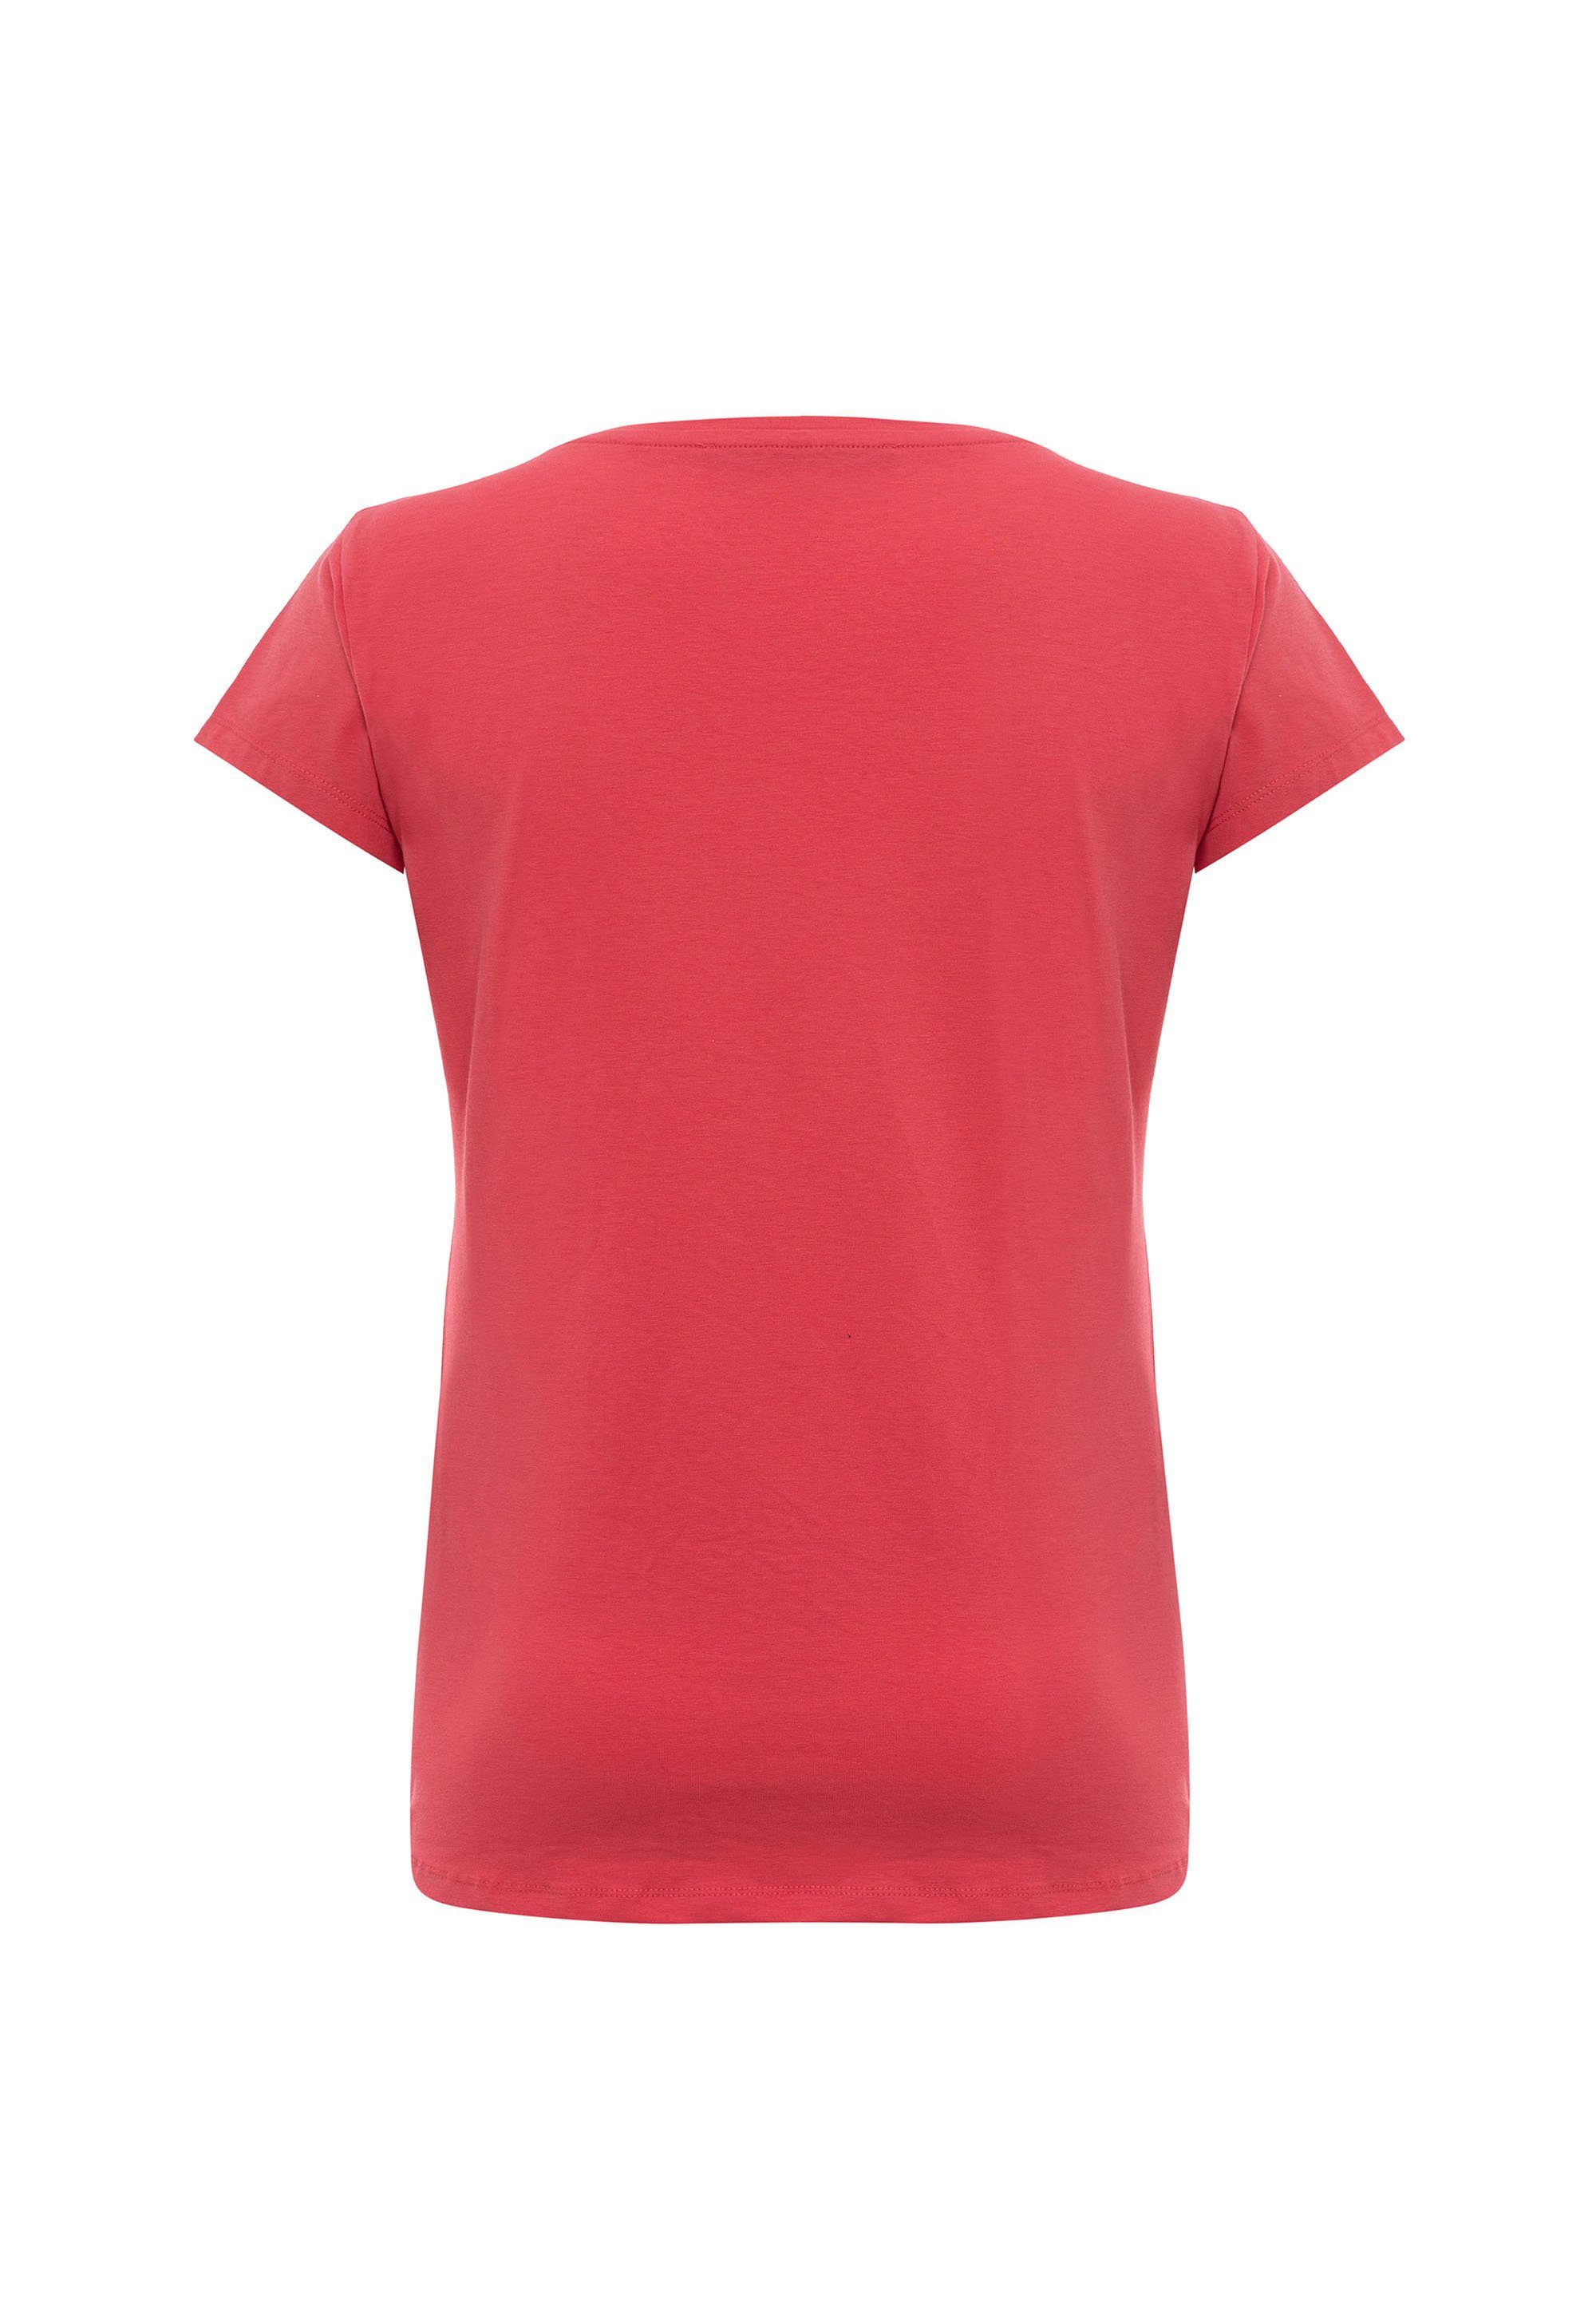 Cipo & Baxx fuchsia modischem mit Frontprint T-Shirt